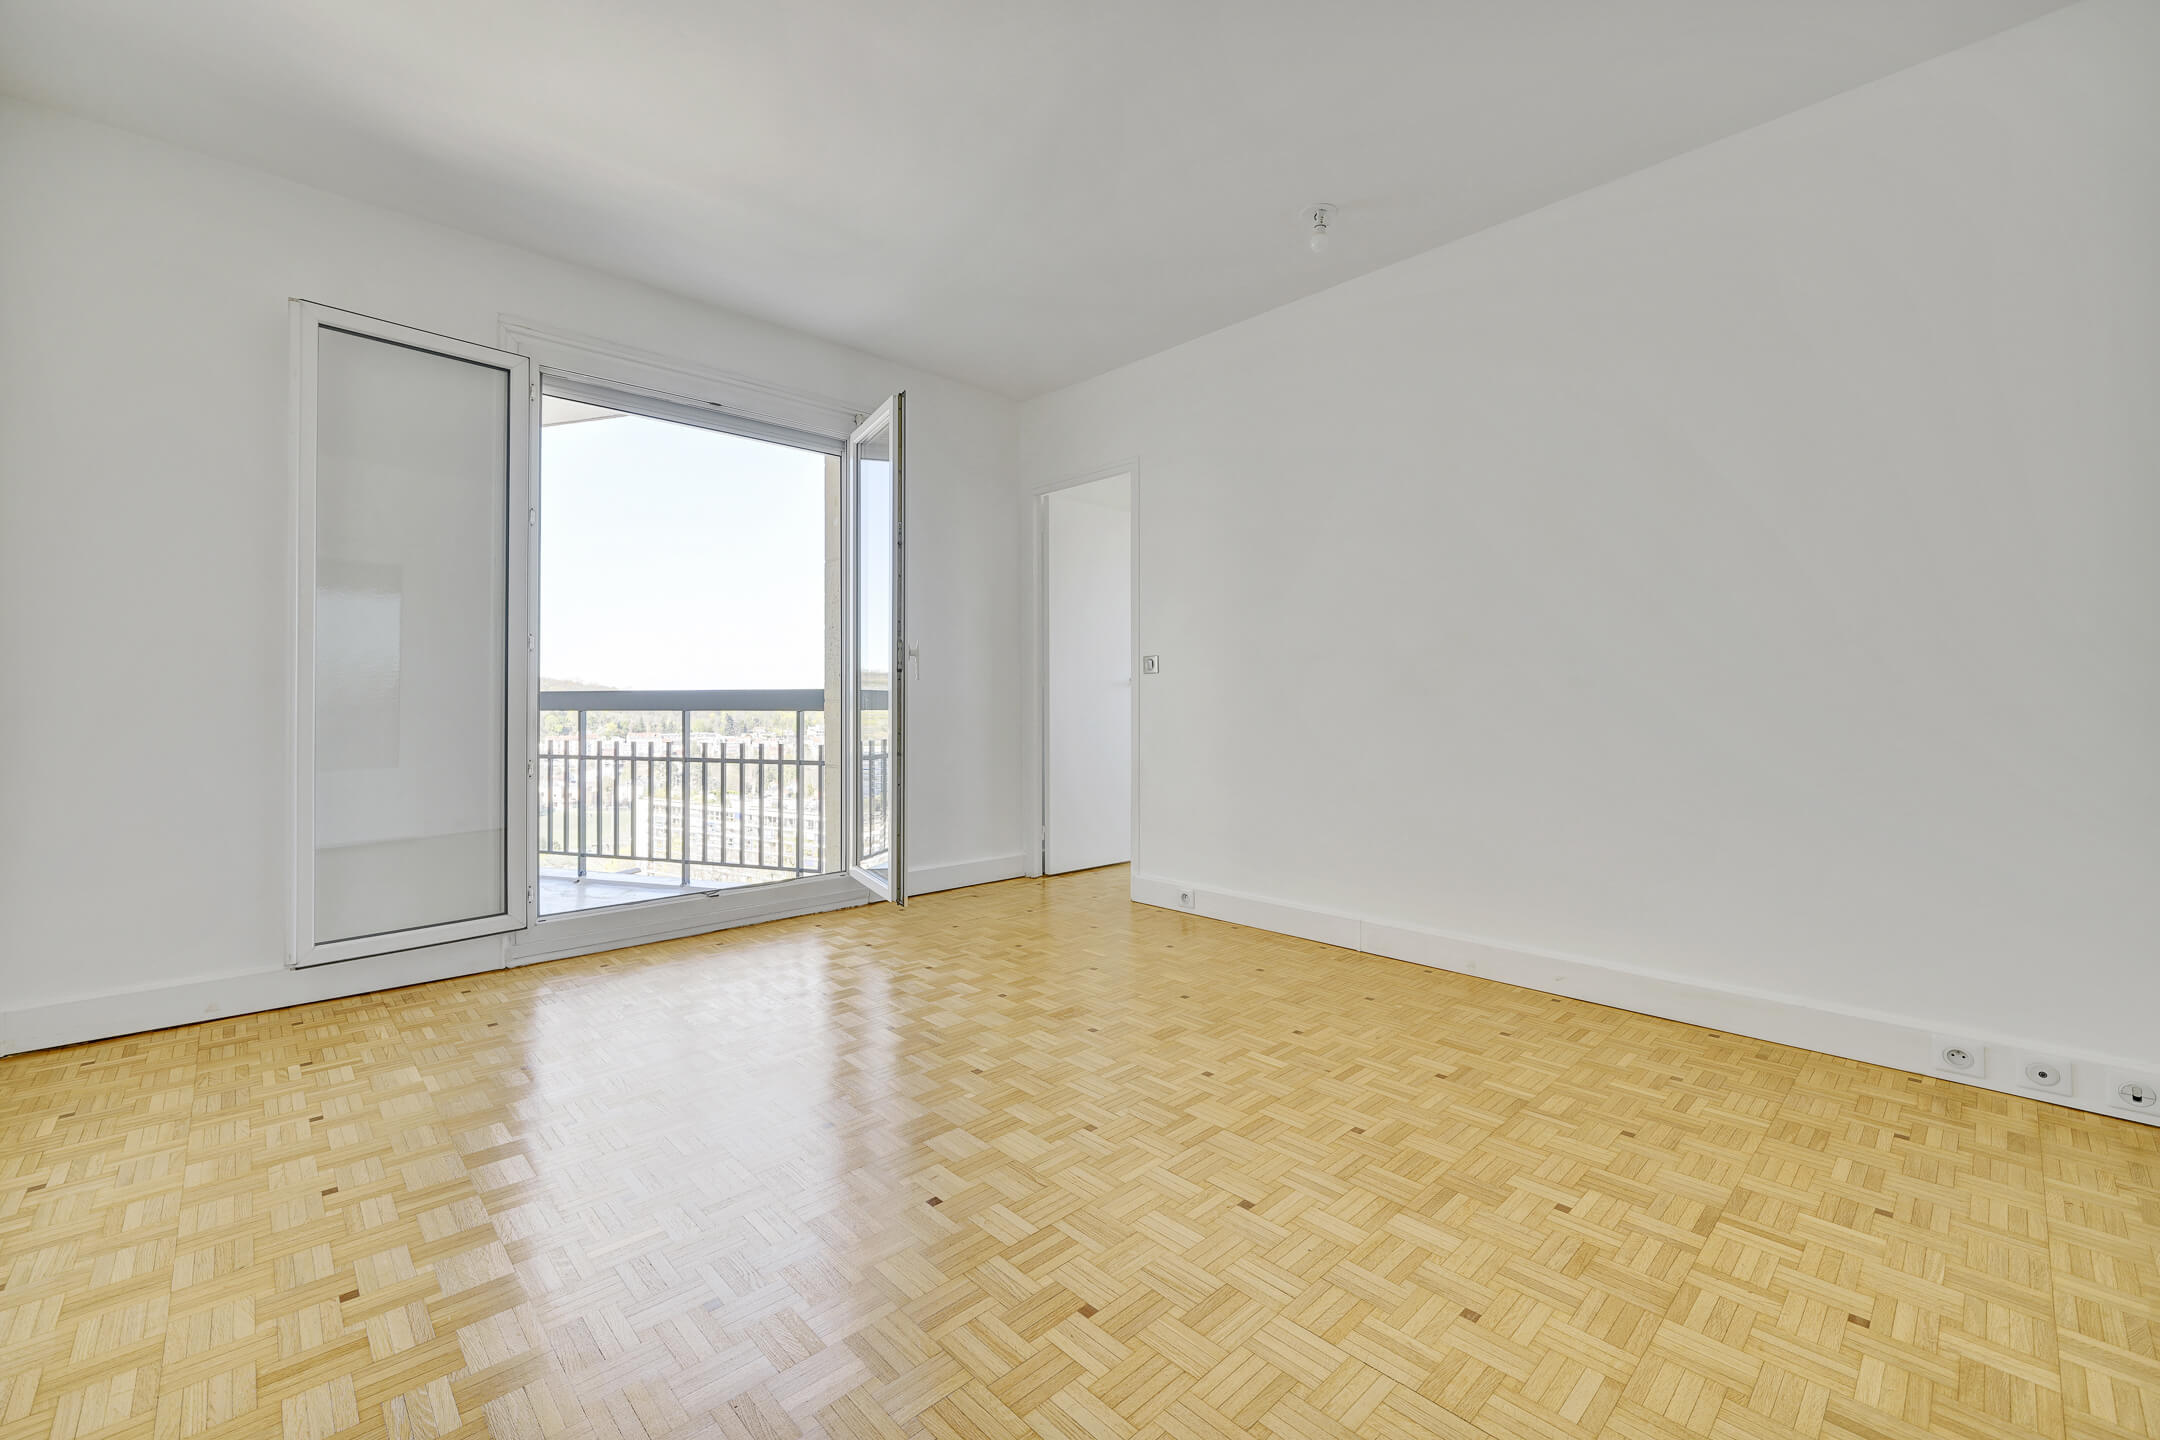 Appartement a louer ville-d'avray - 4 pièce(s) - 80.83 m2 - Surfyn